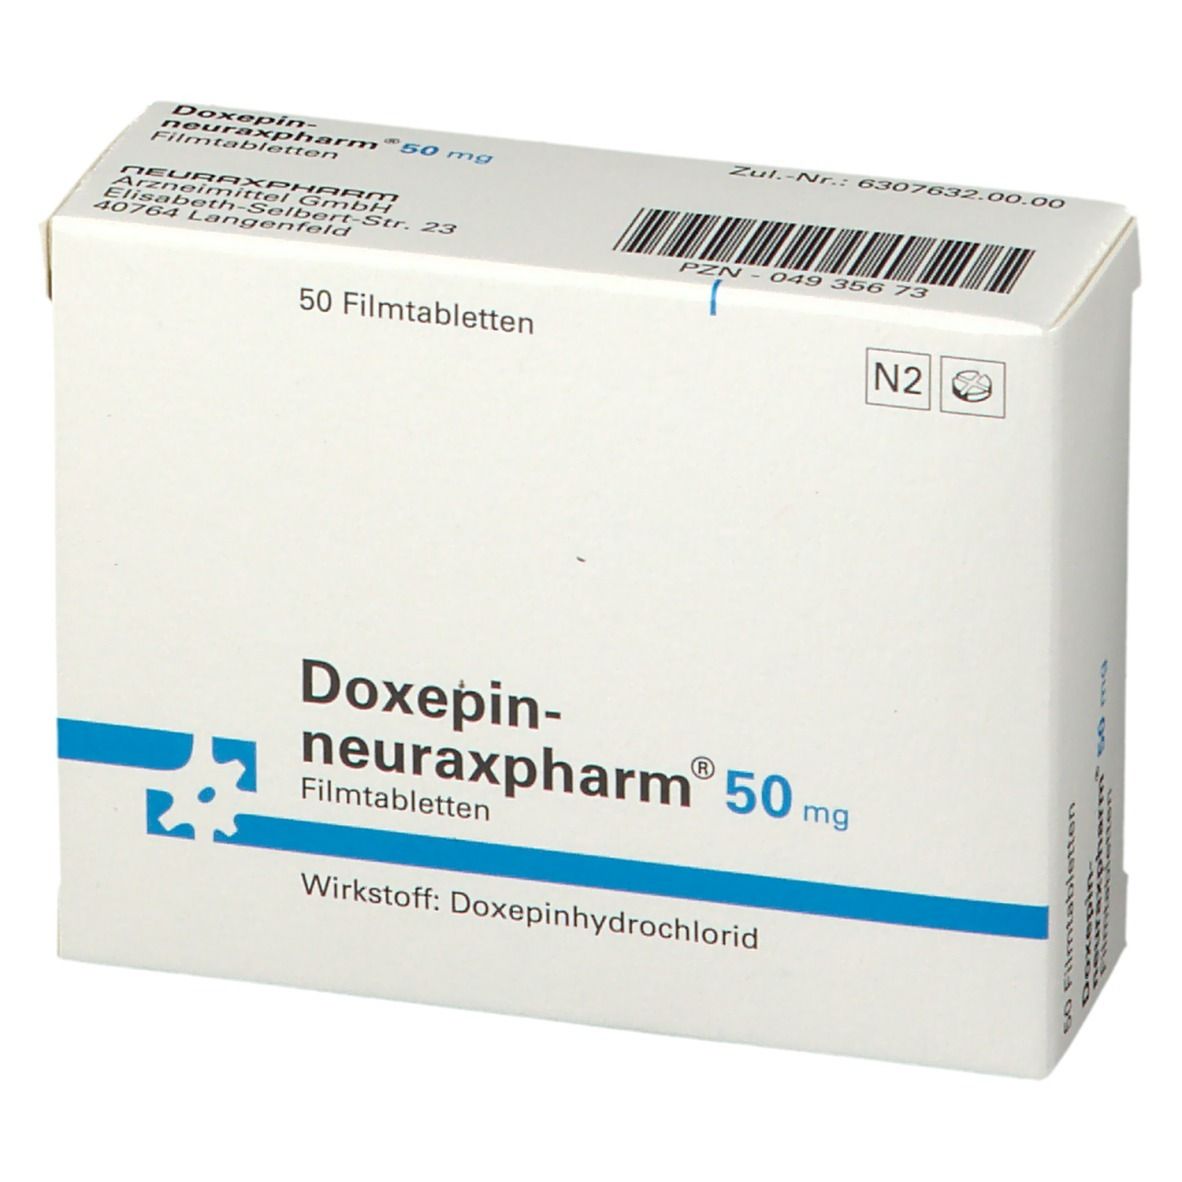 Doxepin-neuraxpharm® 50 mg